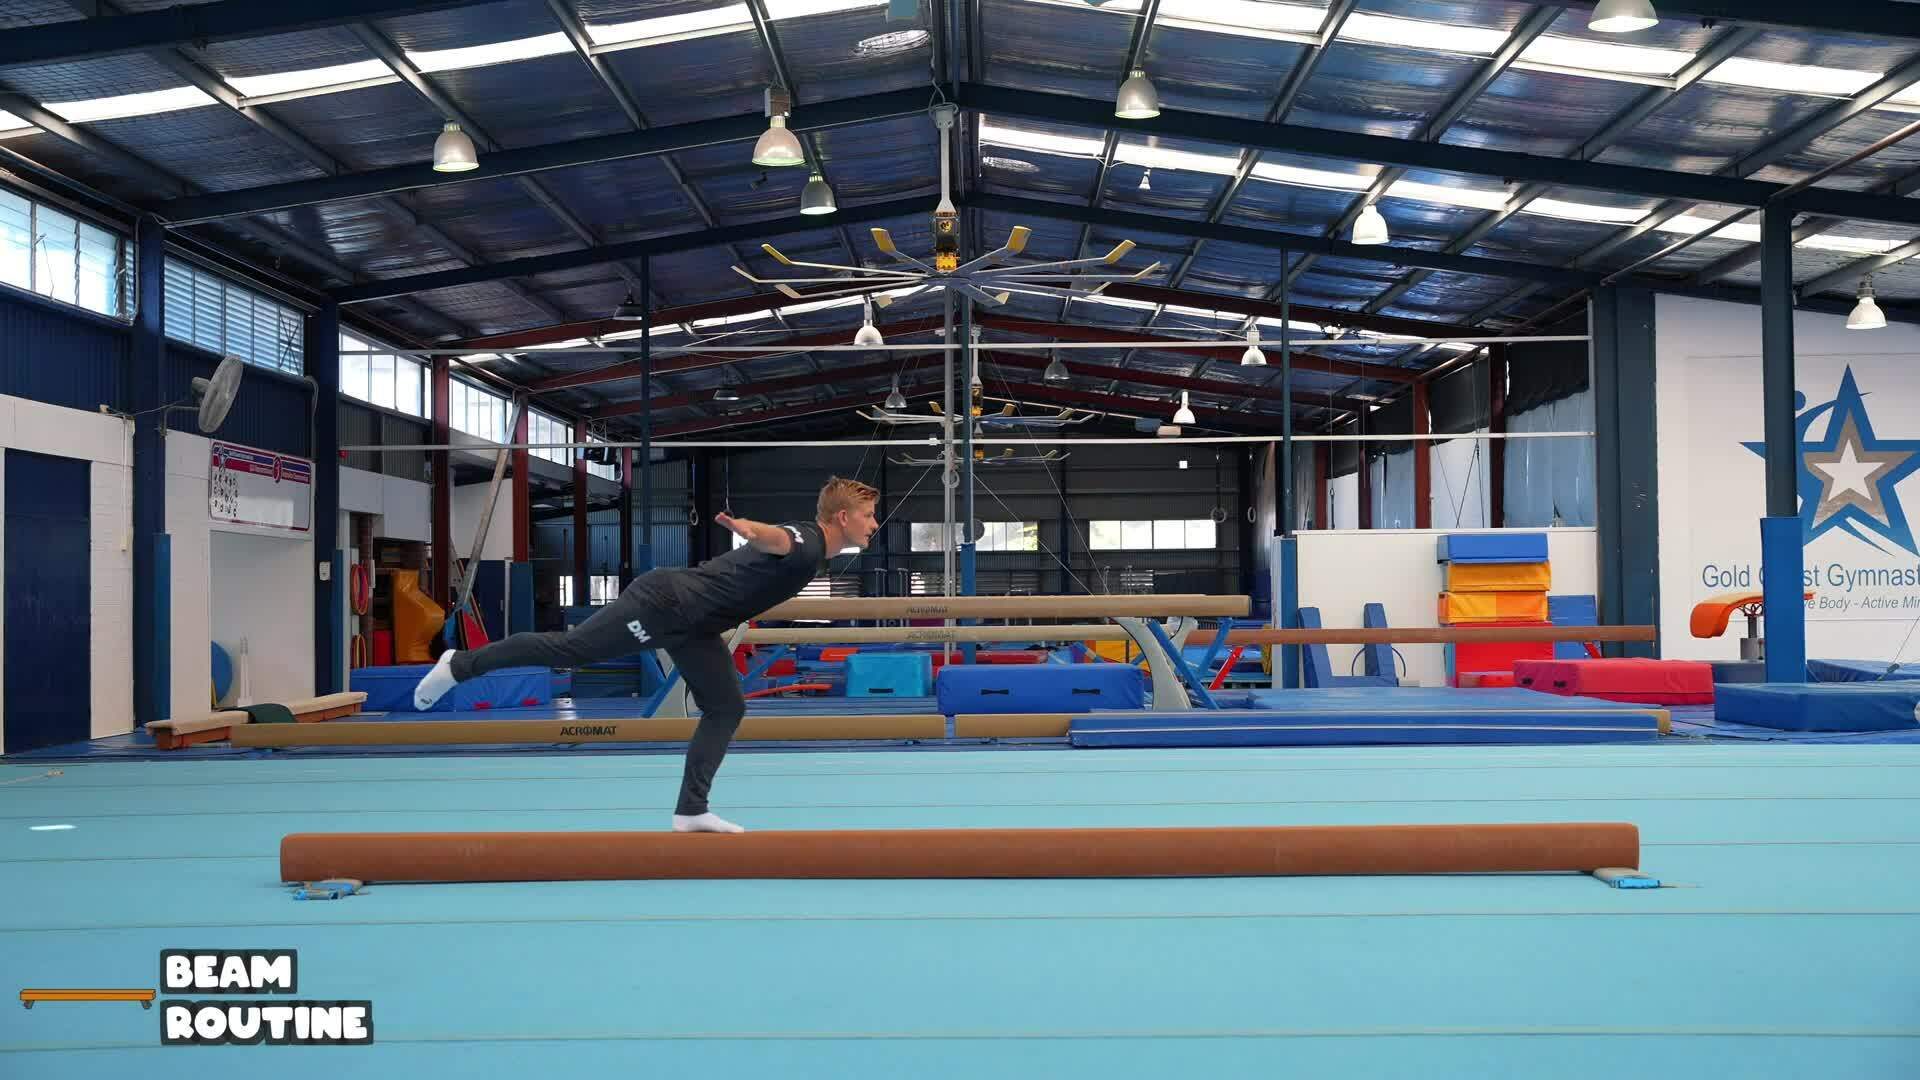 Elementary gymnastics - Beam - 7 beam routine